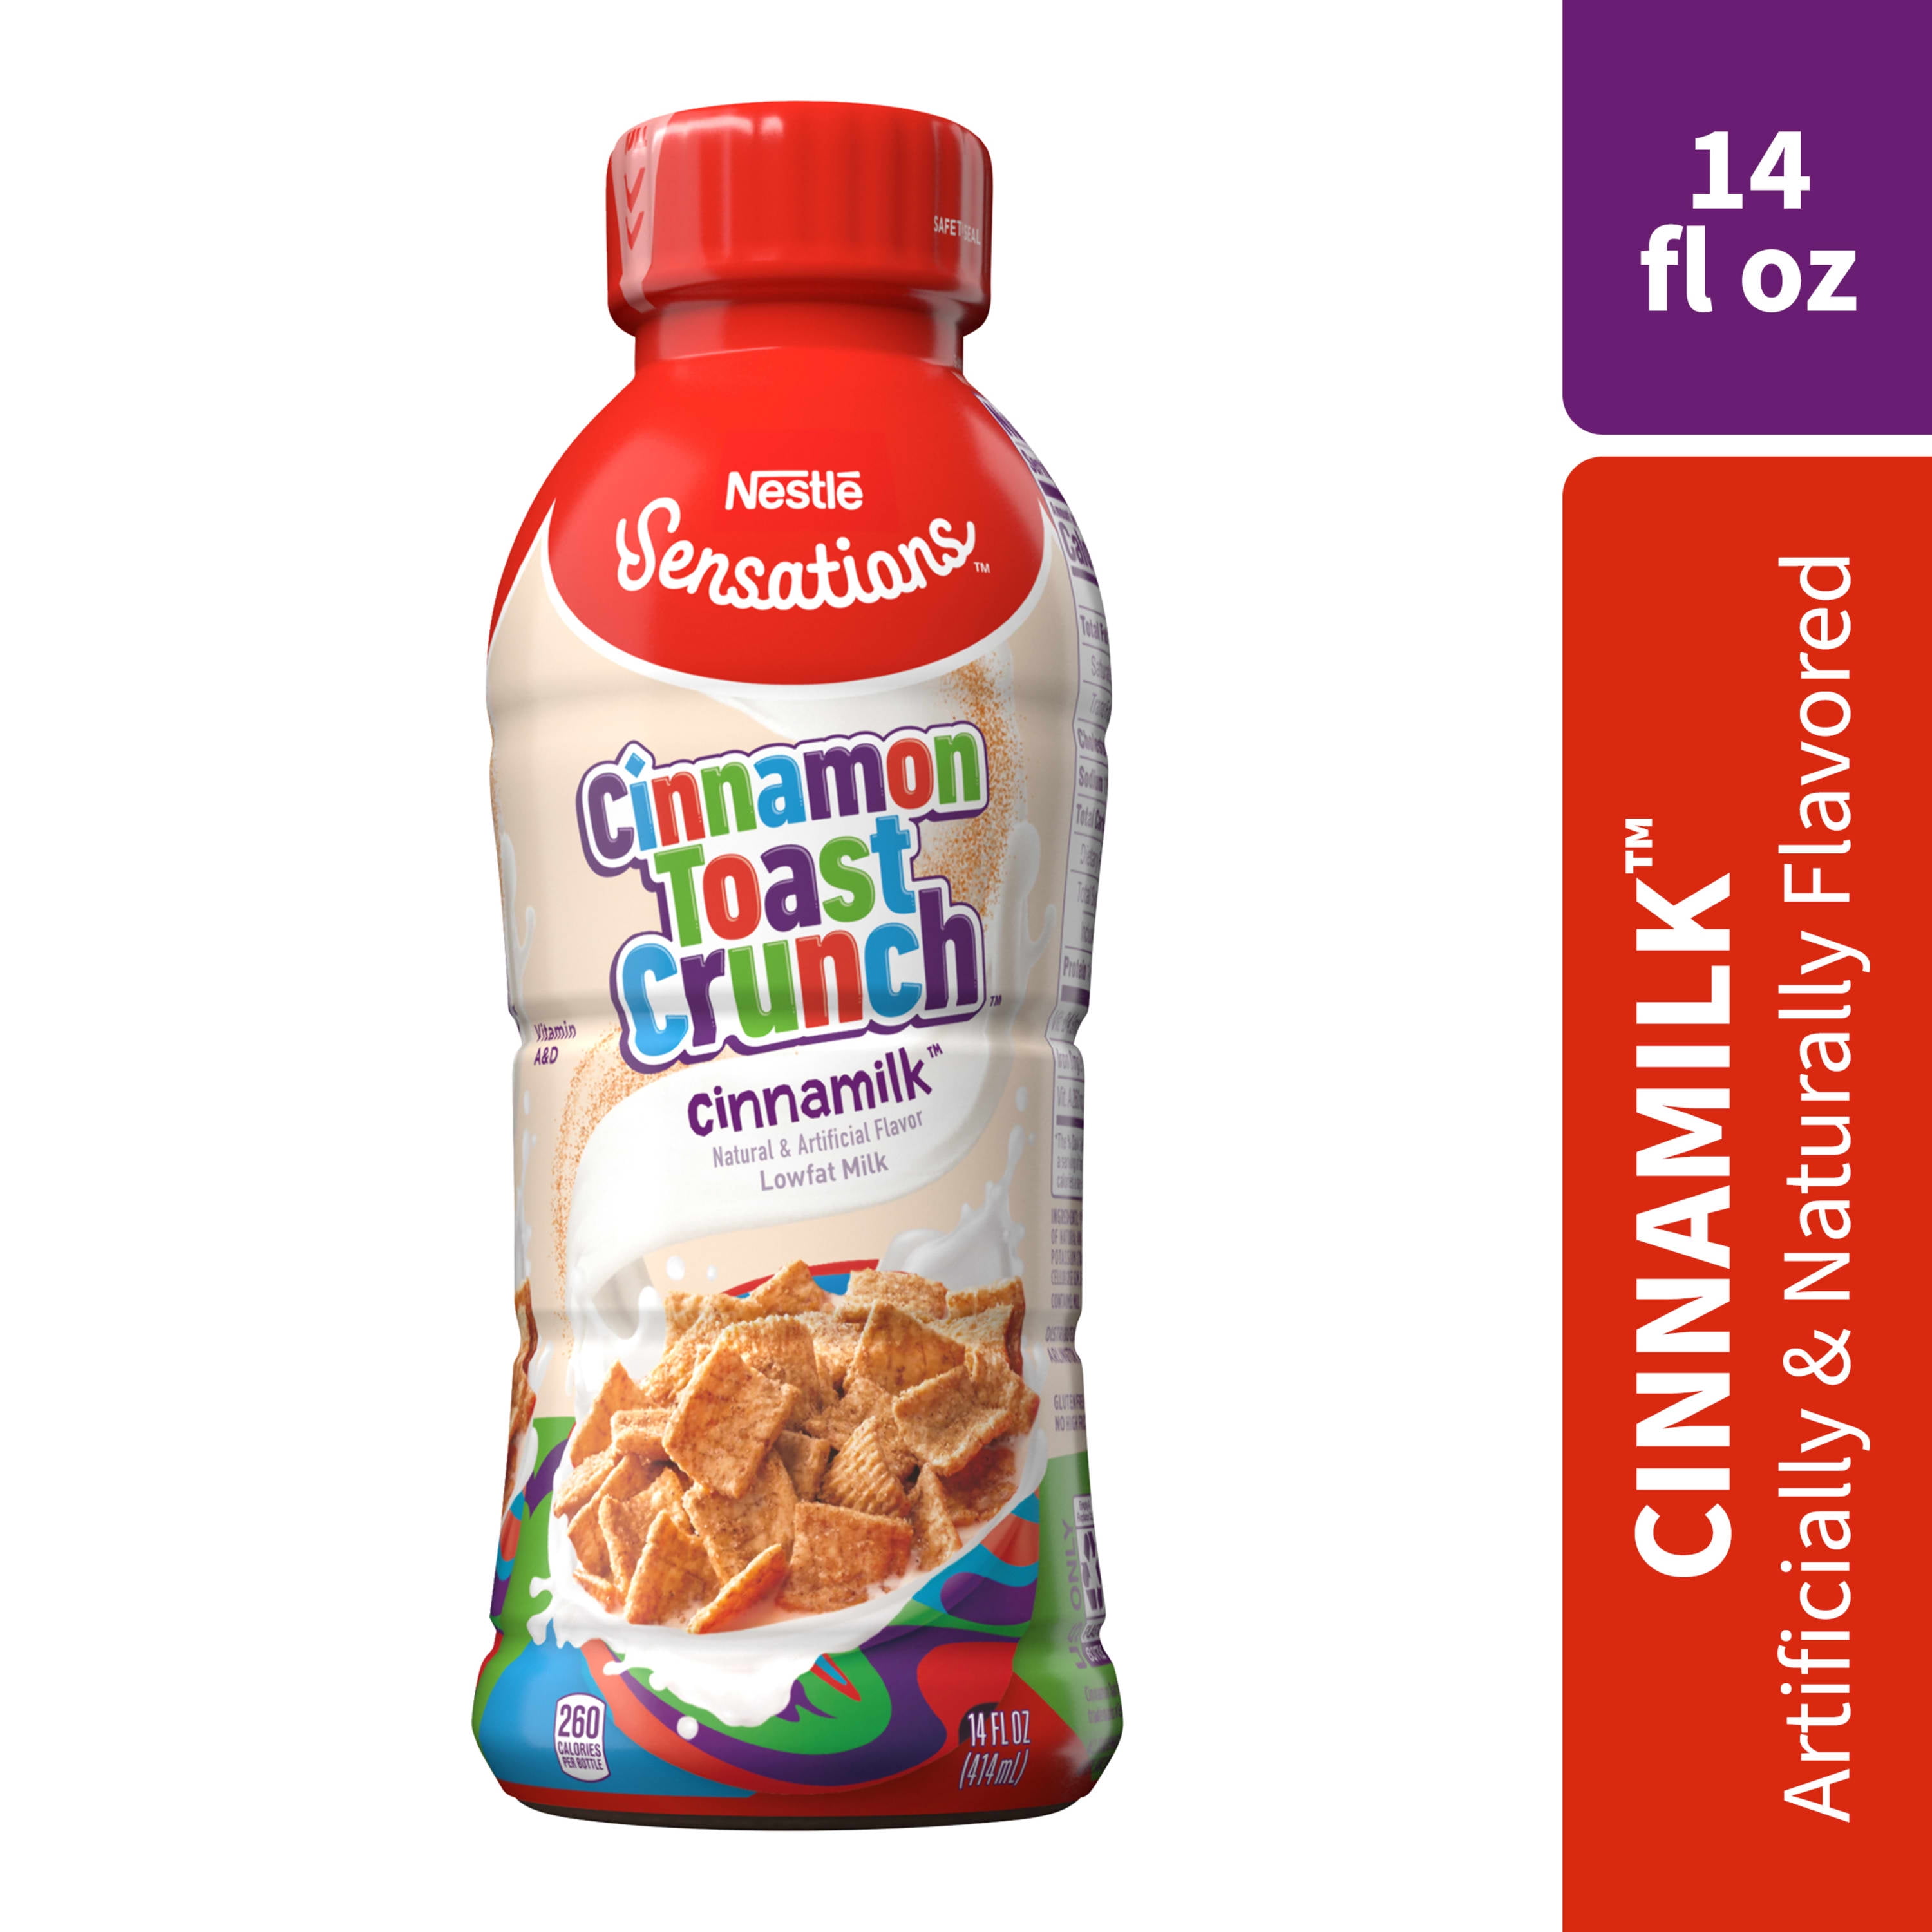  Moptrek mily 3-in-1 Instant Cereal Milk Drink and 1-Pack Nestle  Cereal Snack Bundle